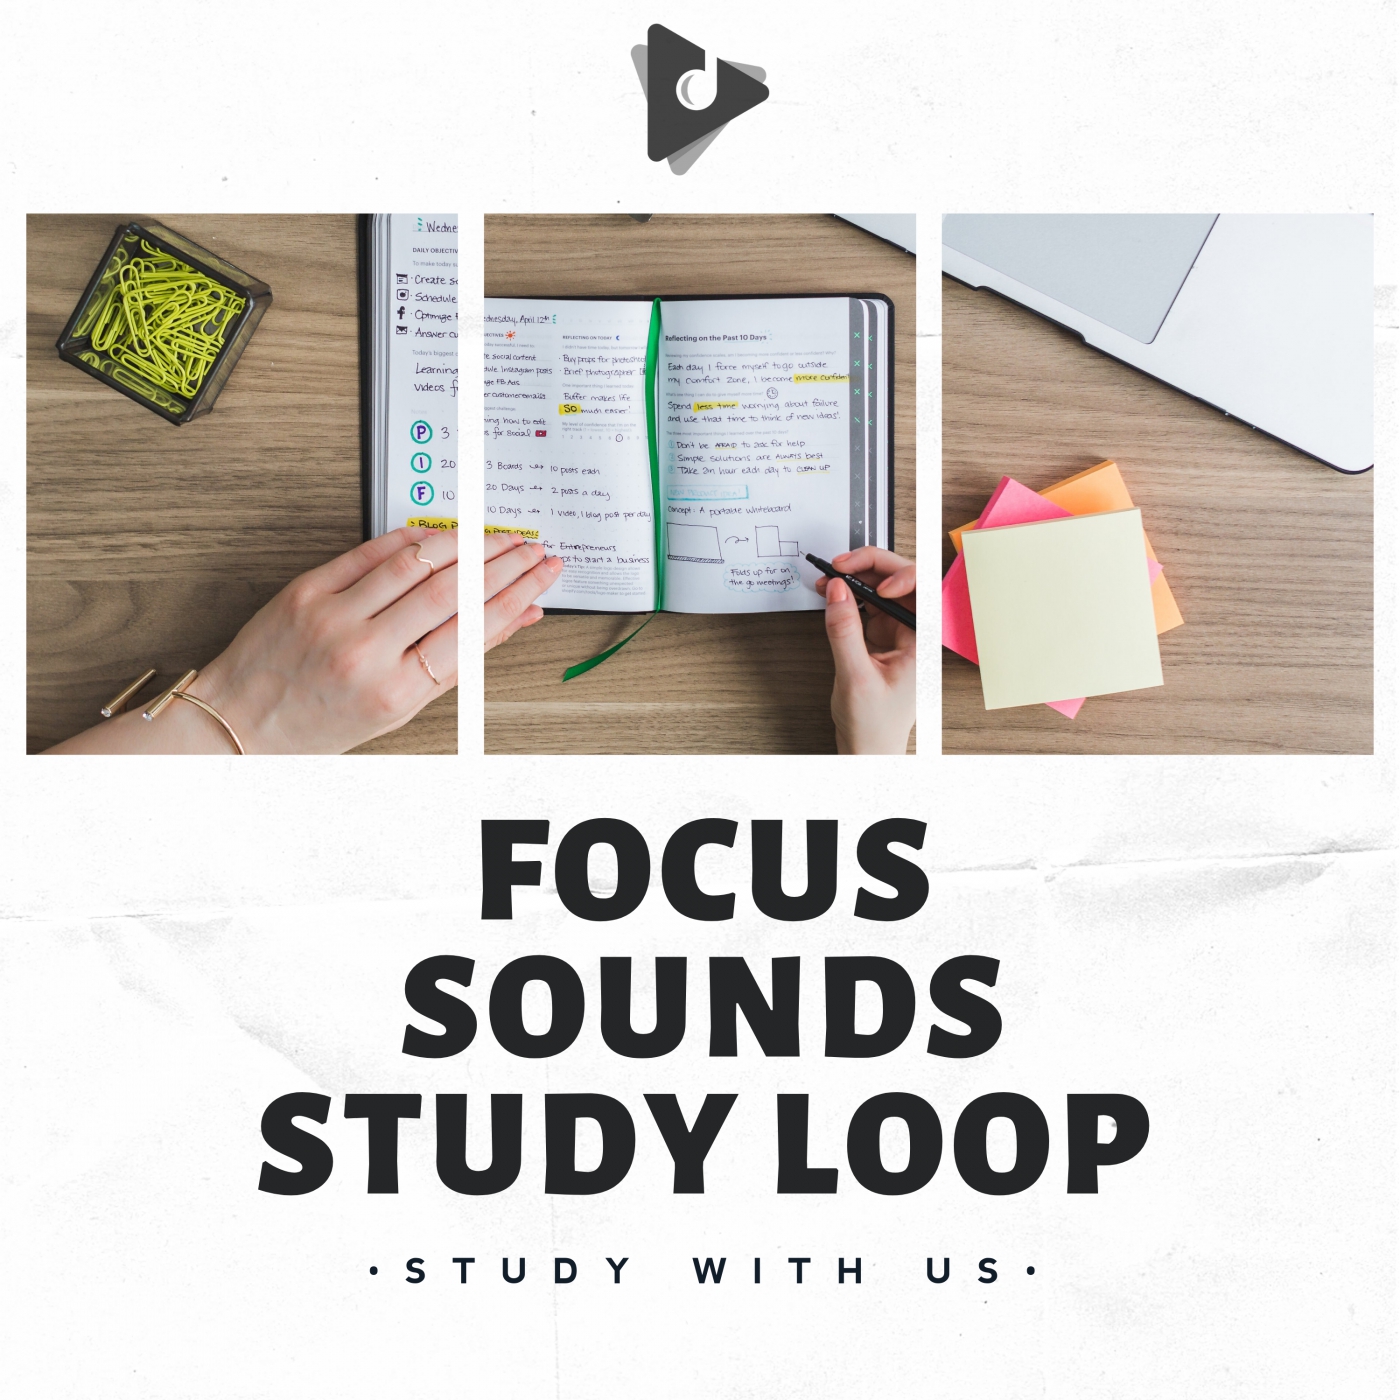 Focus Sounds Study Loop